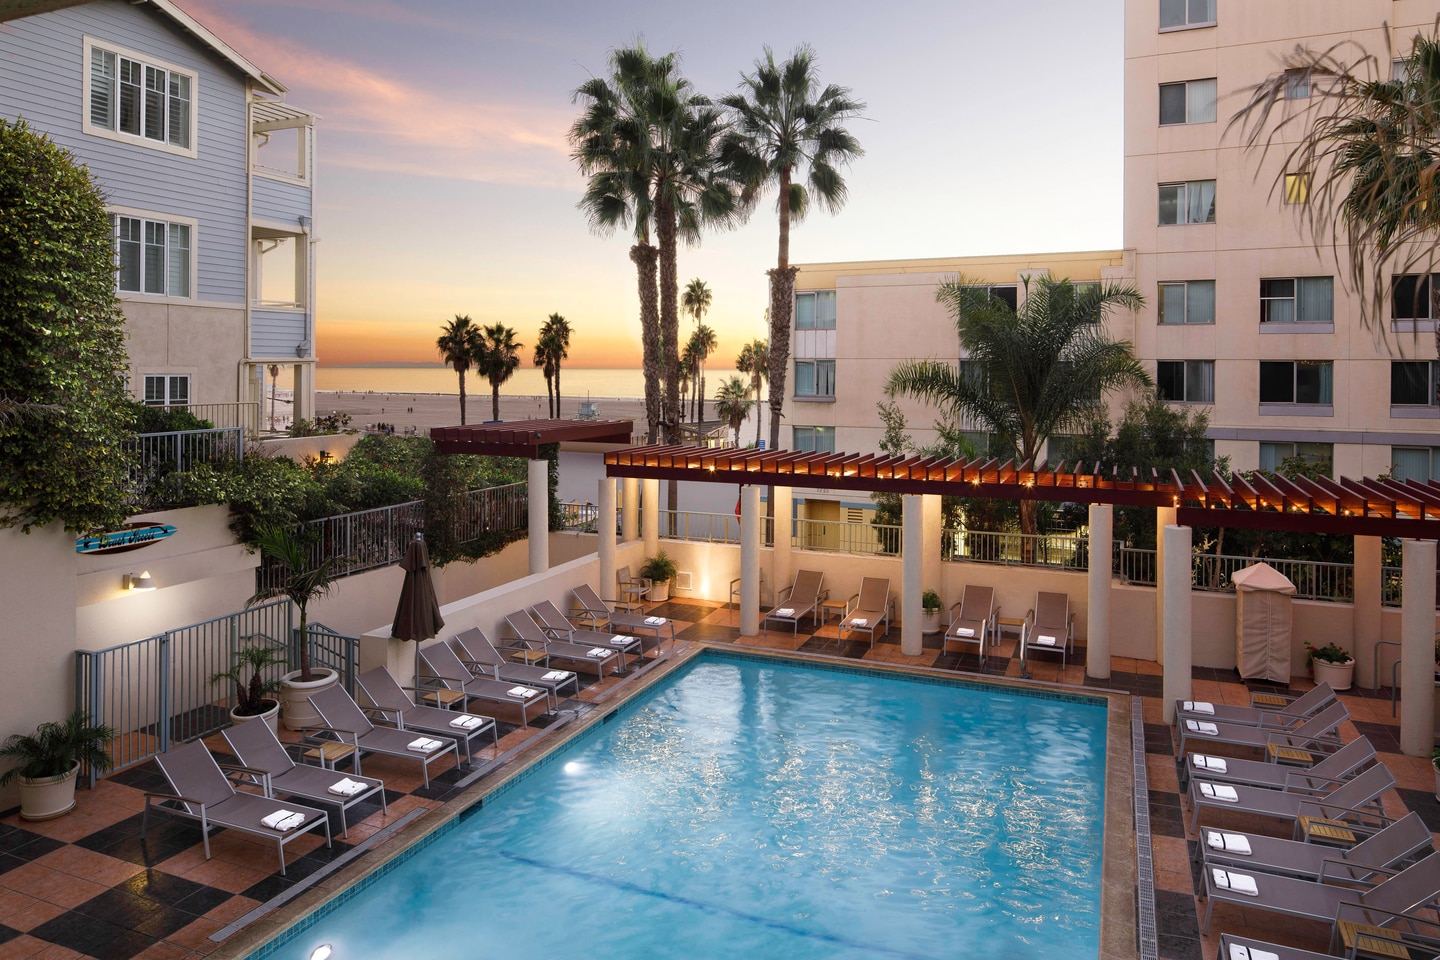 Best Marriott Beach Hotels & Resorts in California For Your Marriott Free Night Certificates